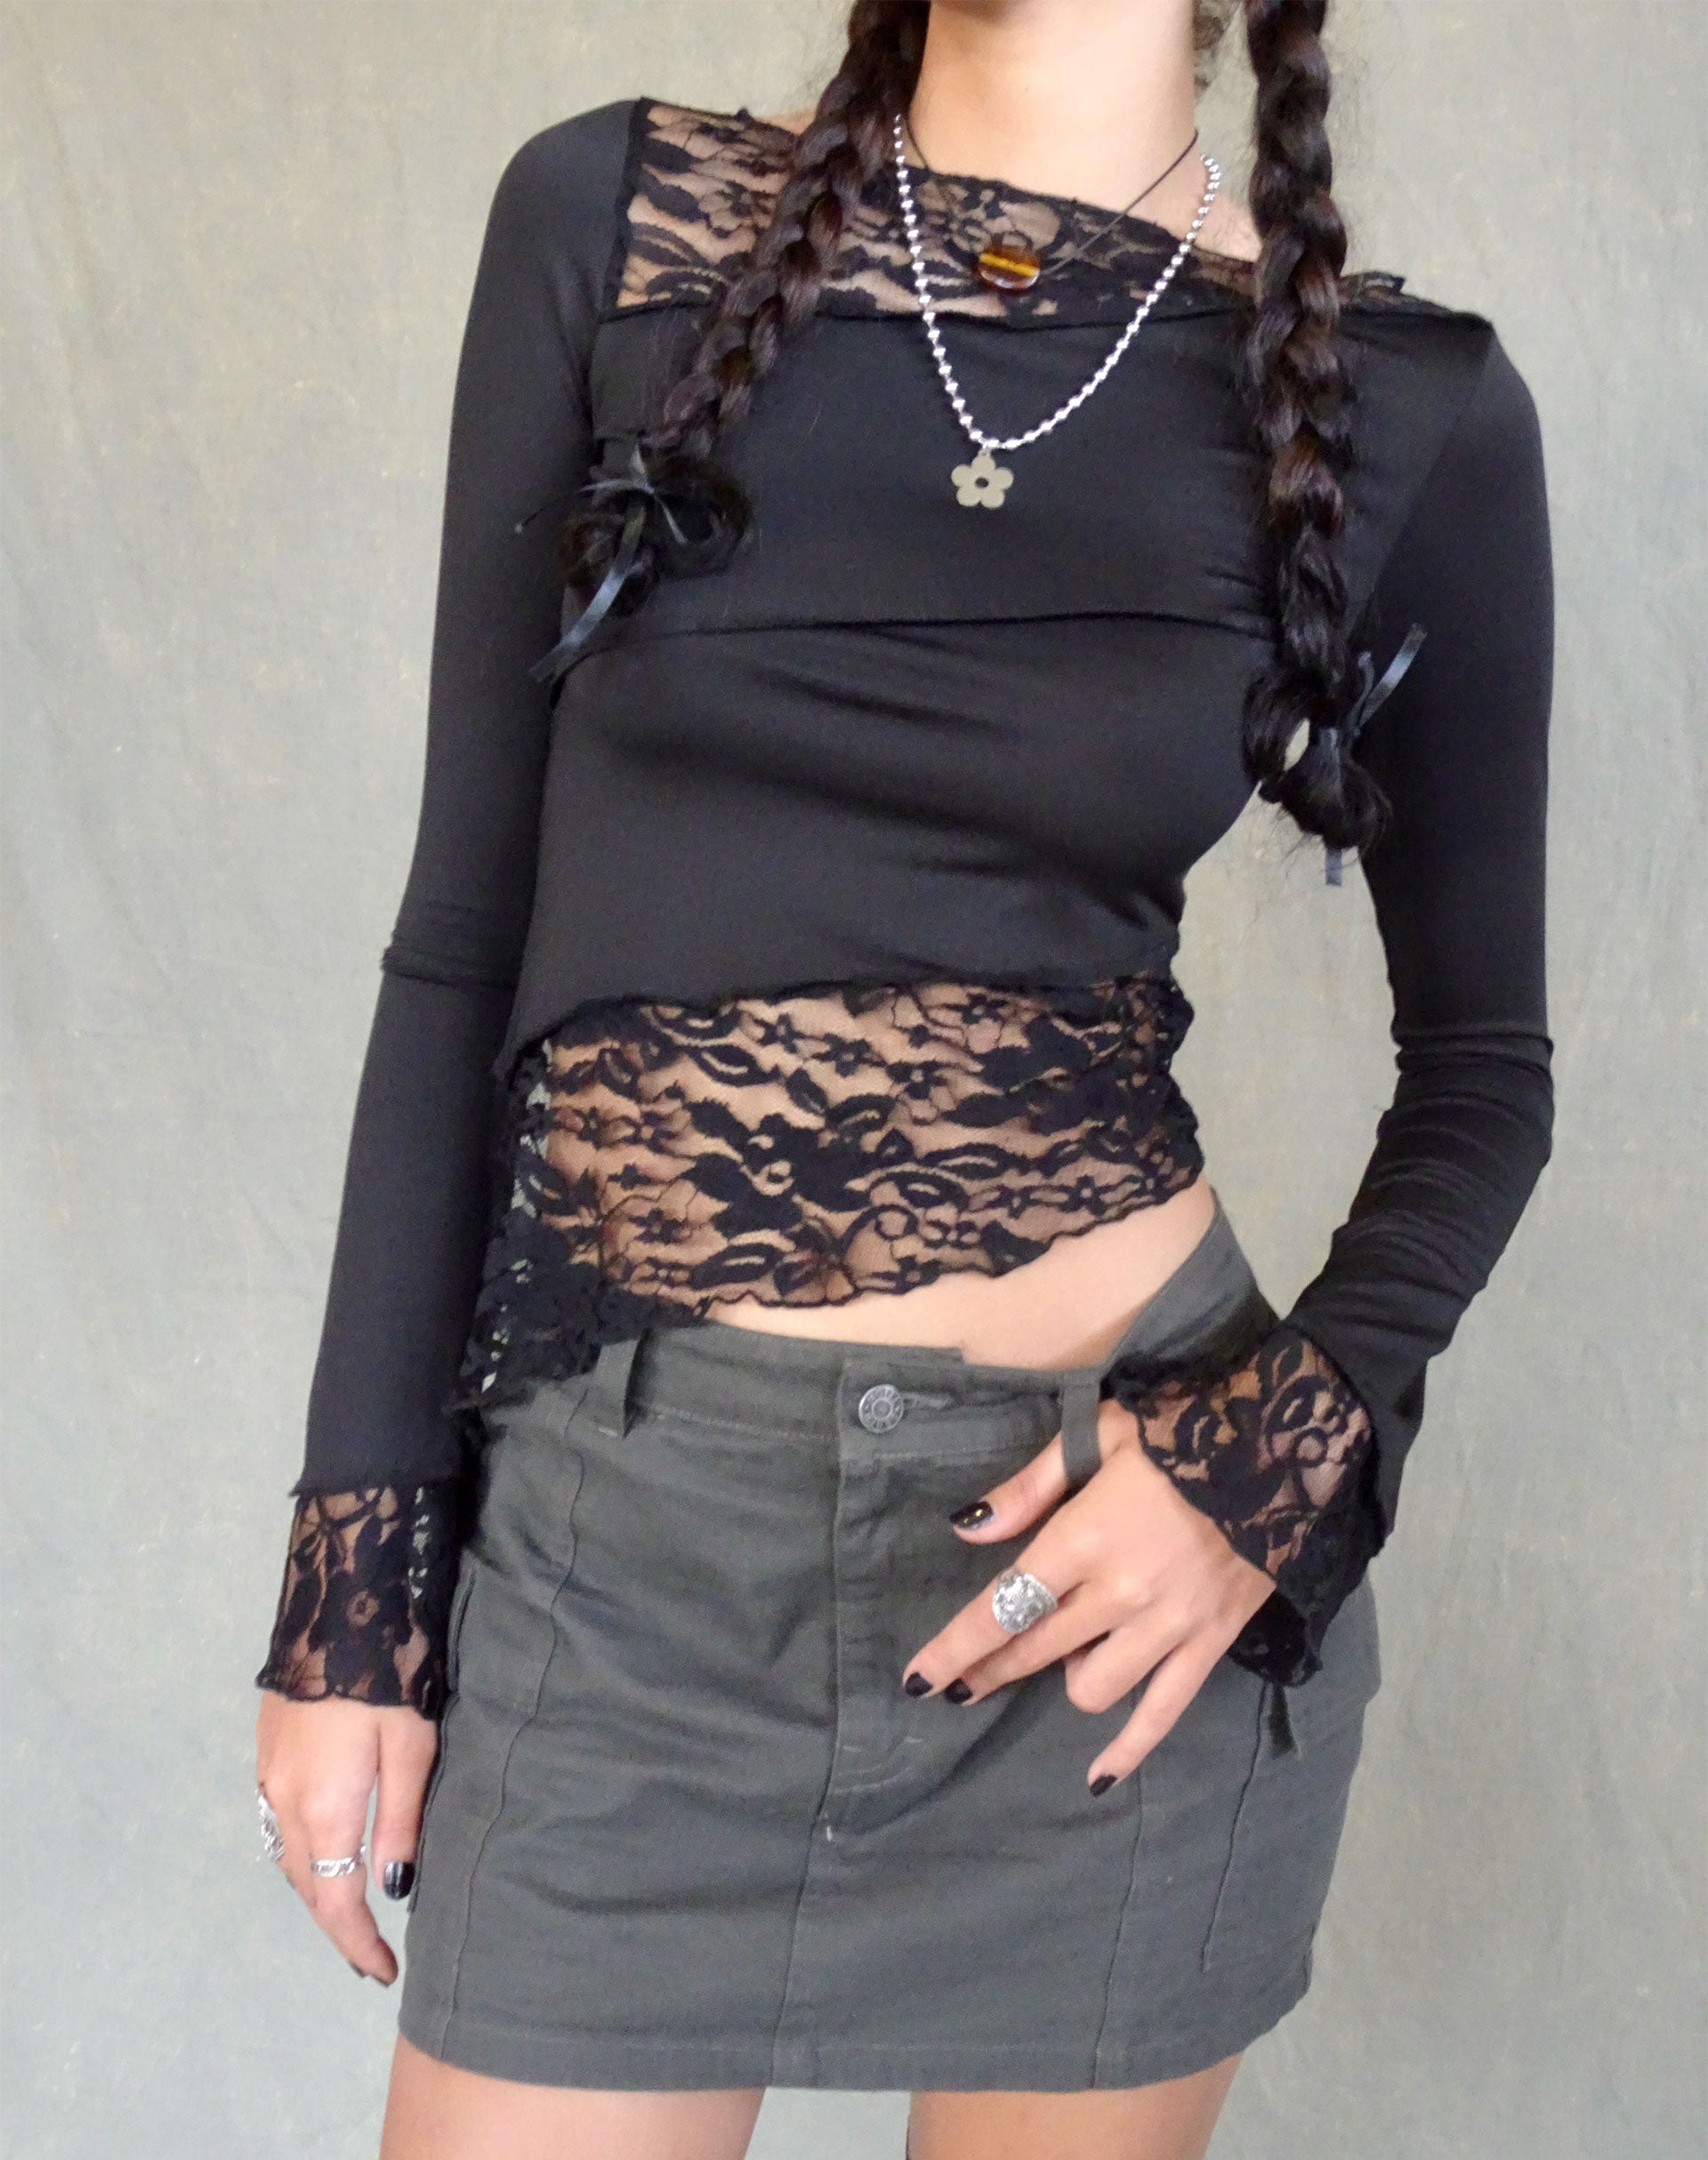 Beatrix Black Lace Long Sleeve Crop Top